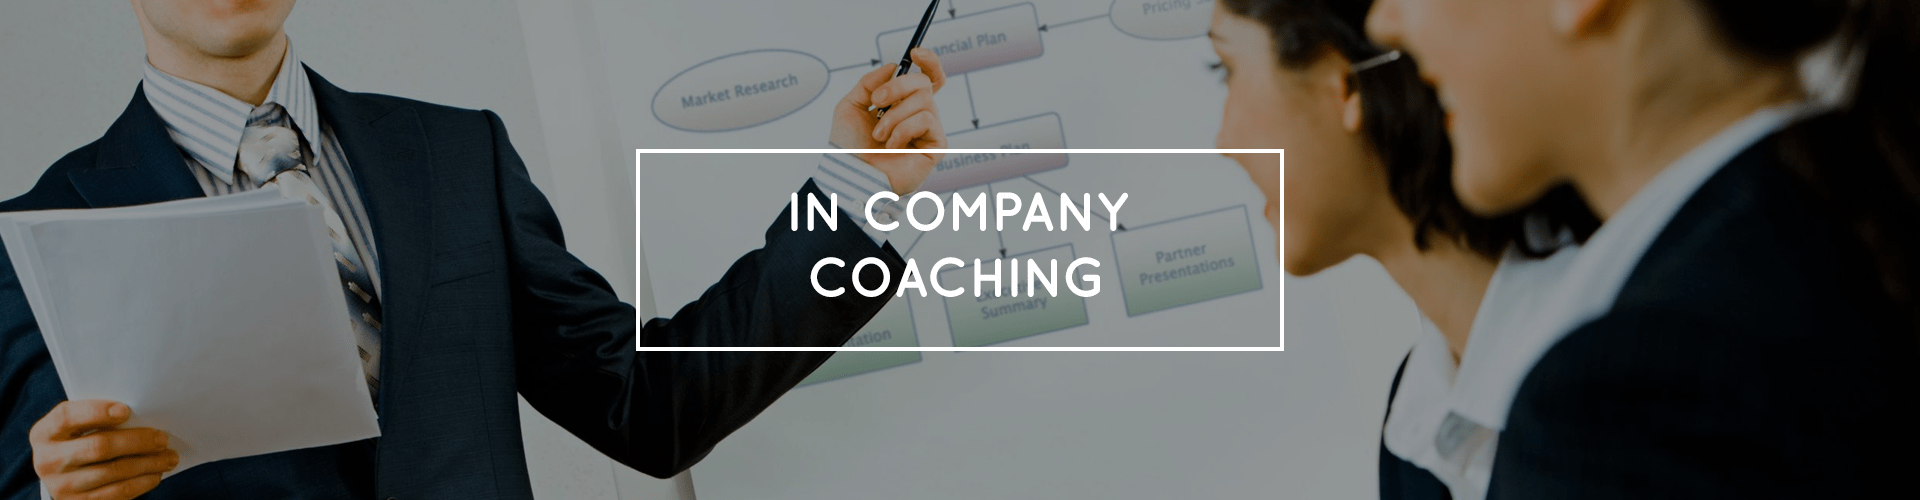 In company coaching